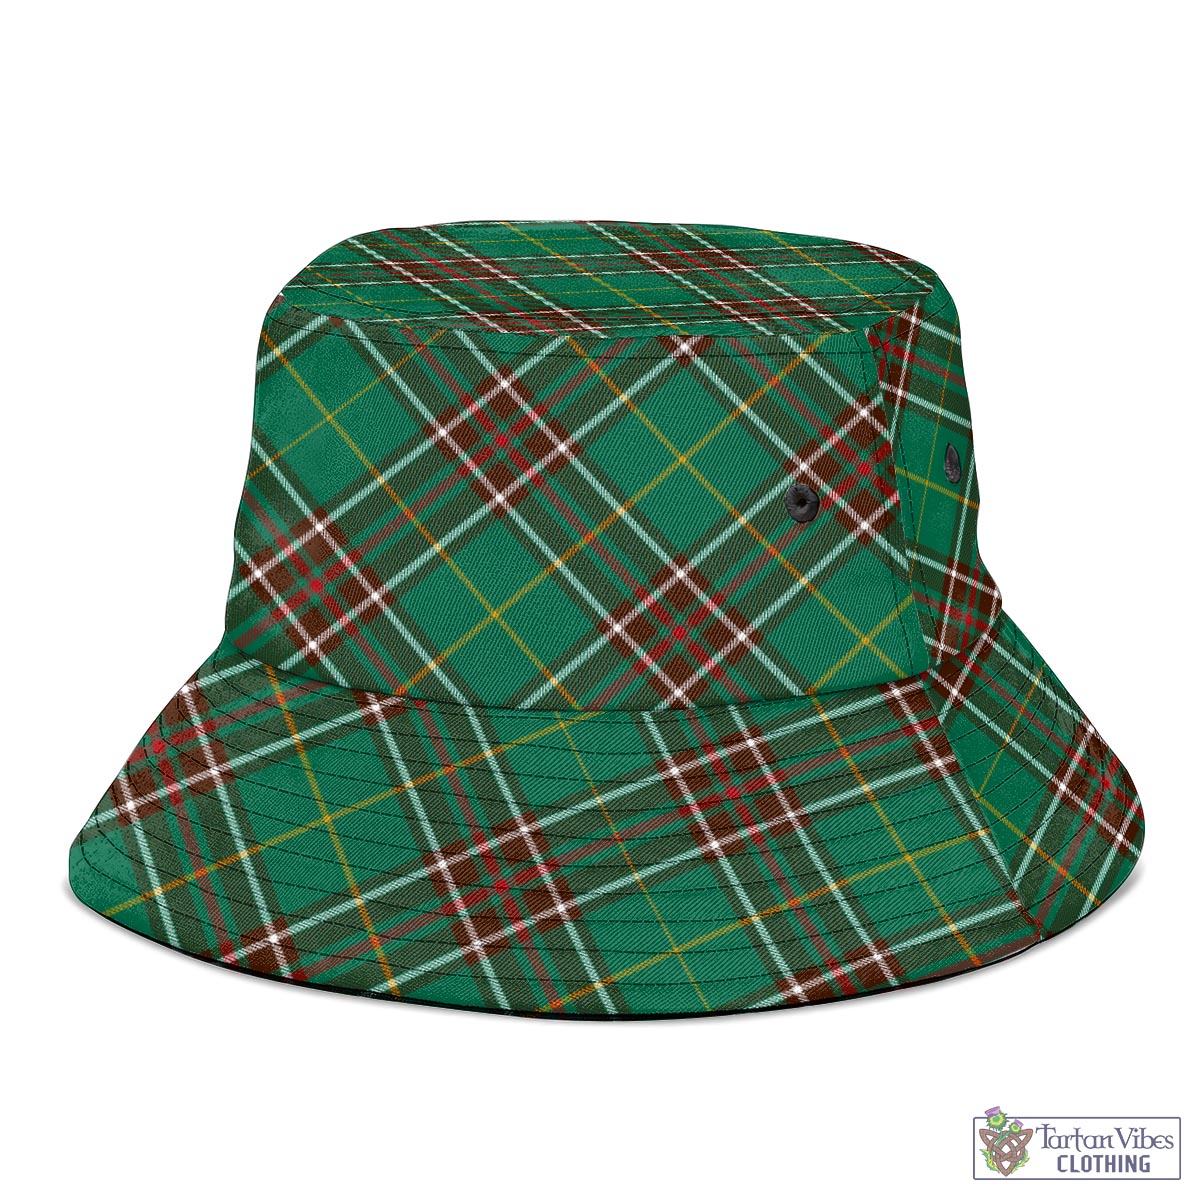 Tartan Vibes Clothing Newfoundland And Labrador Province Canada Tartan Bucket Hat